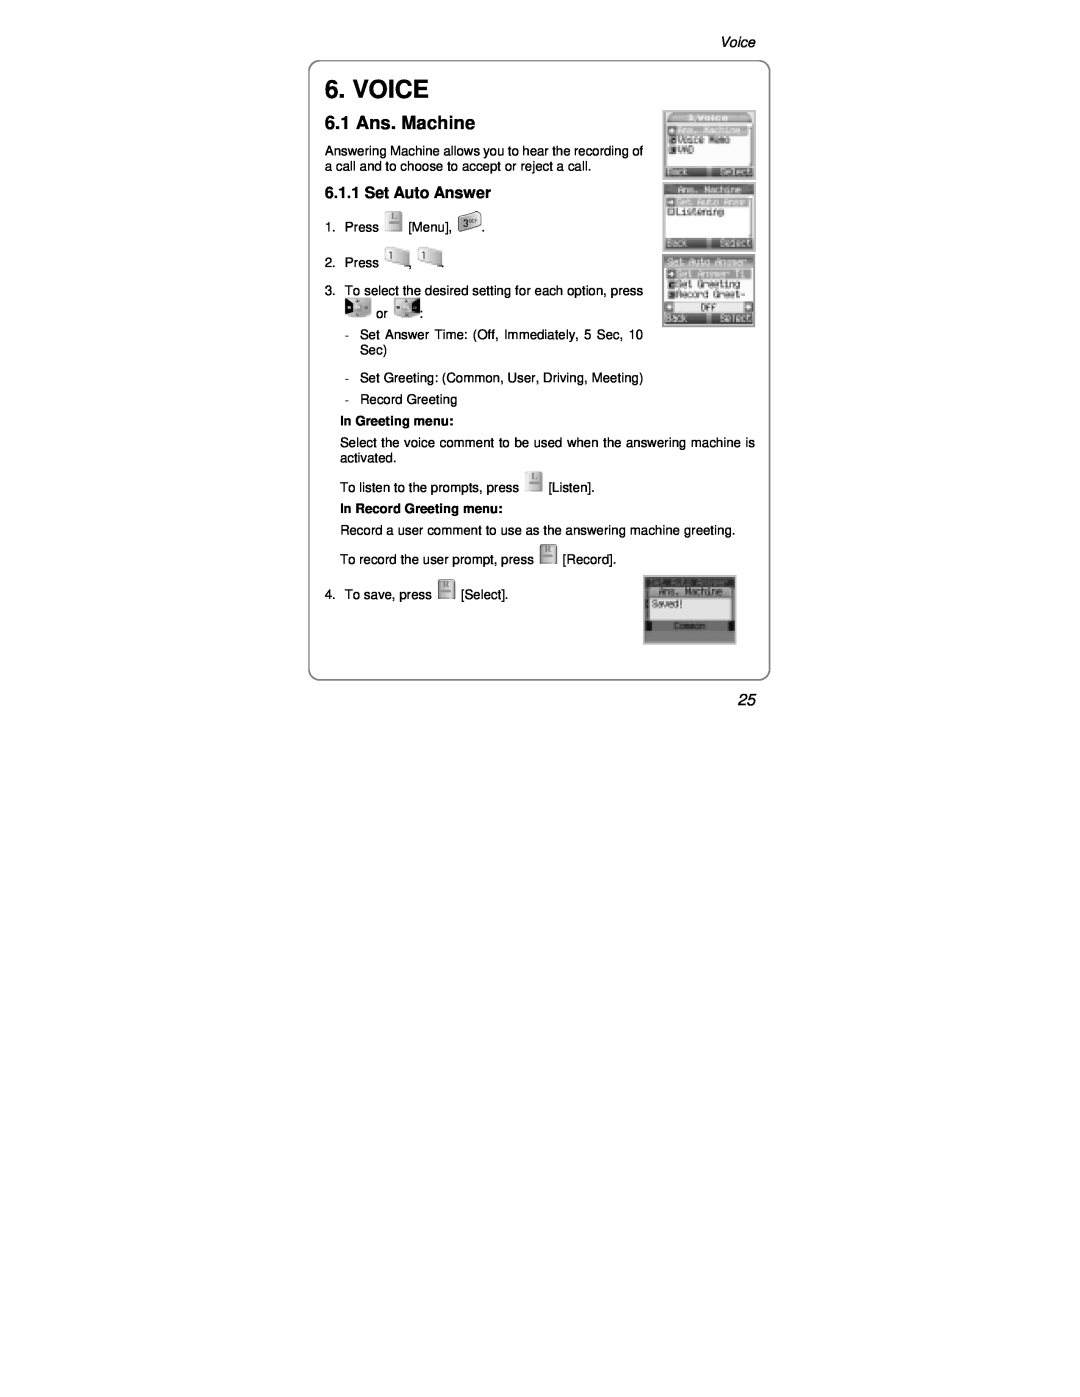 UTStarcom Handset warranty Voice, 6.1 Ans. Machine, Set Auto Answer, In Greeting menu, In Record Greeting menu 